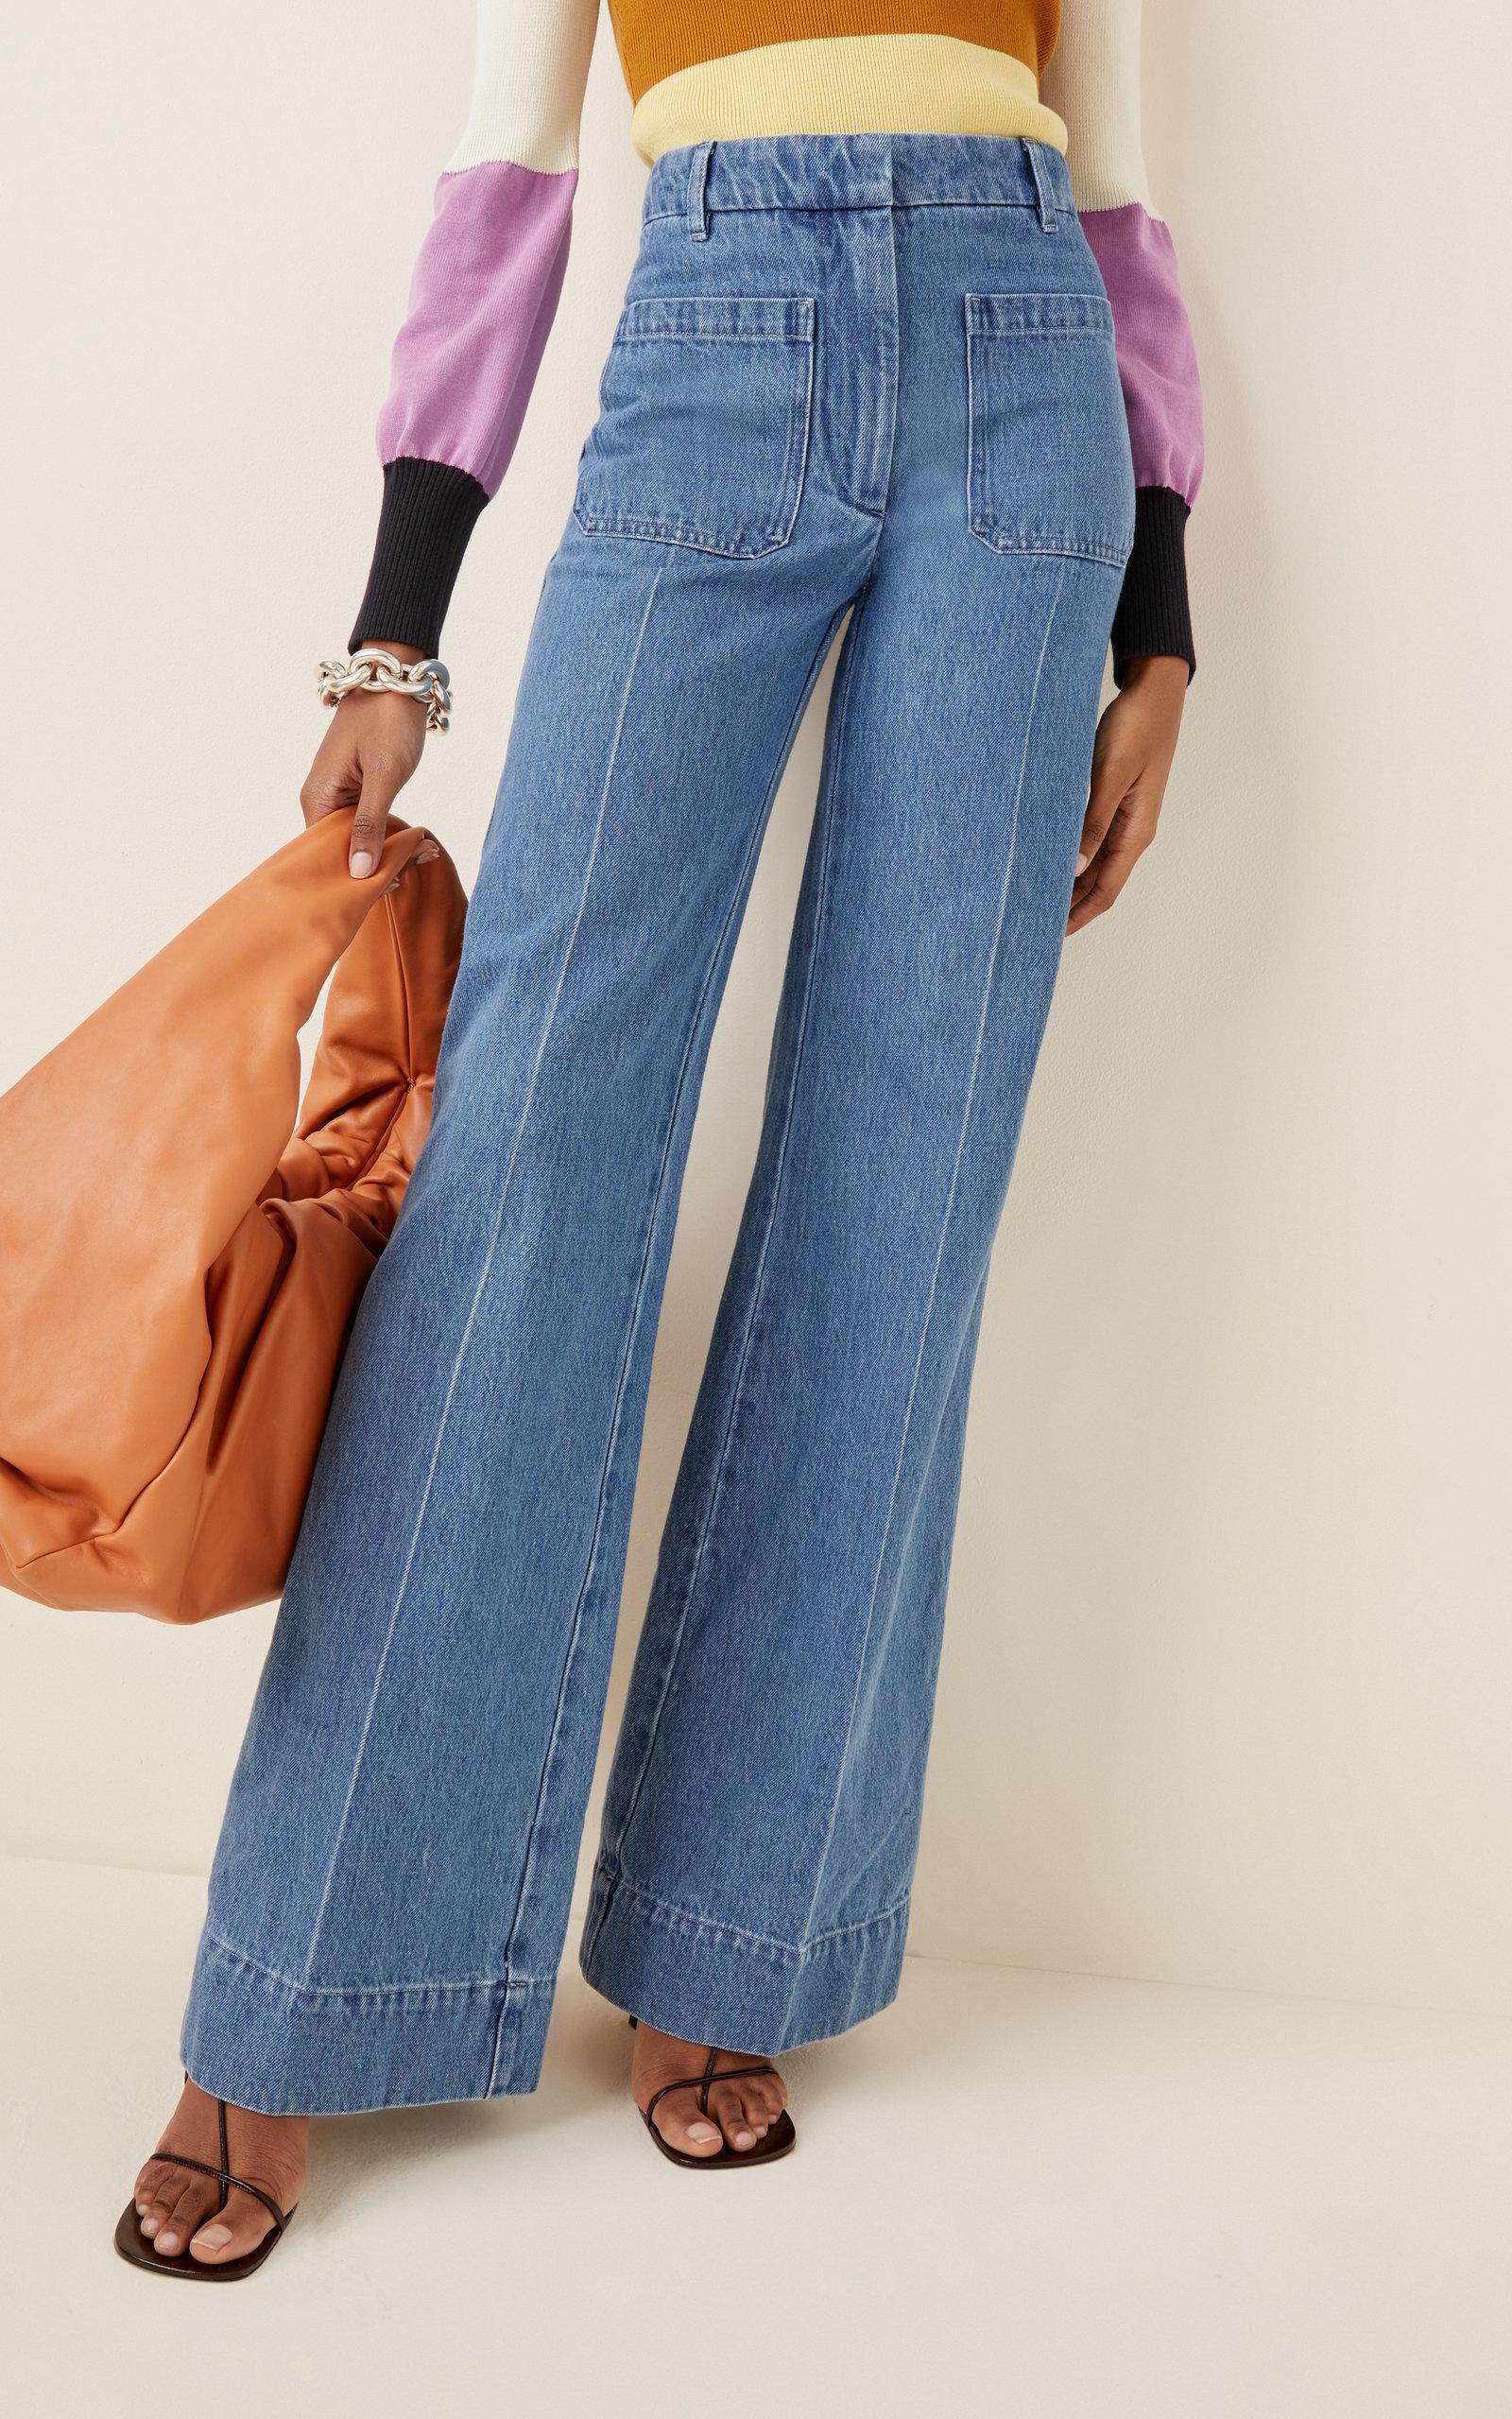 Victoria Beckham Rigid High-rise Flared Jeans in Blue | Lyst